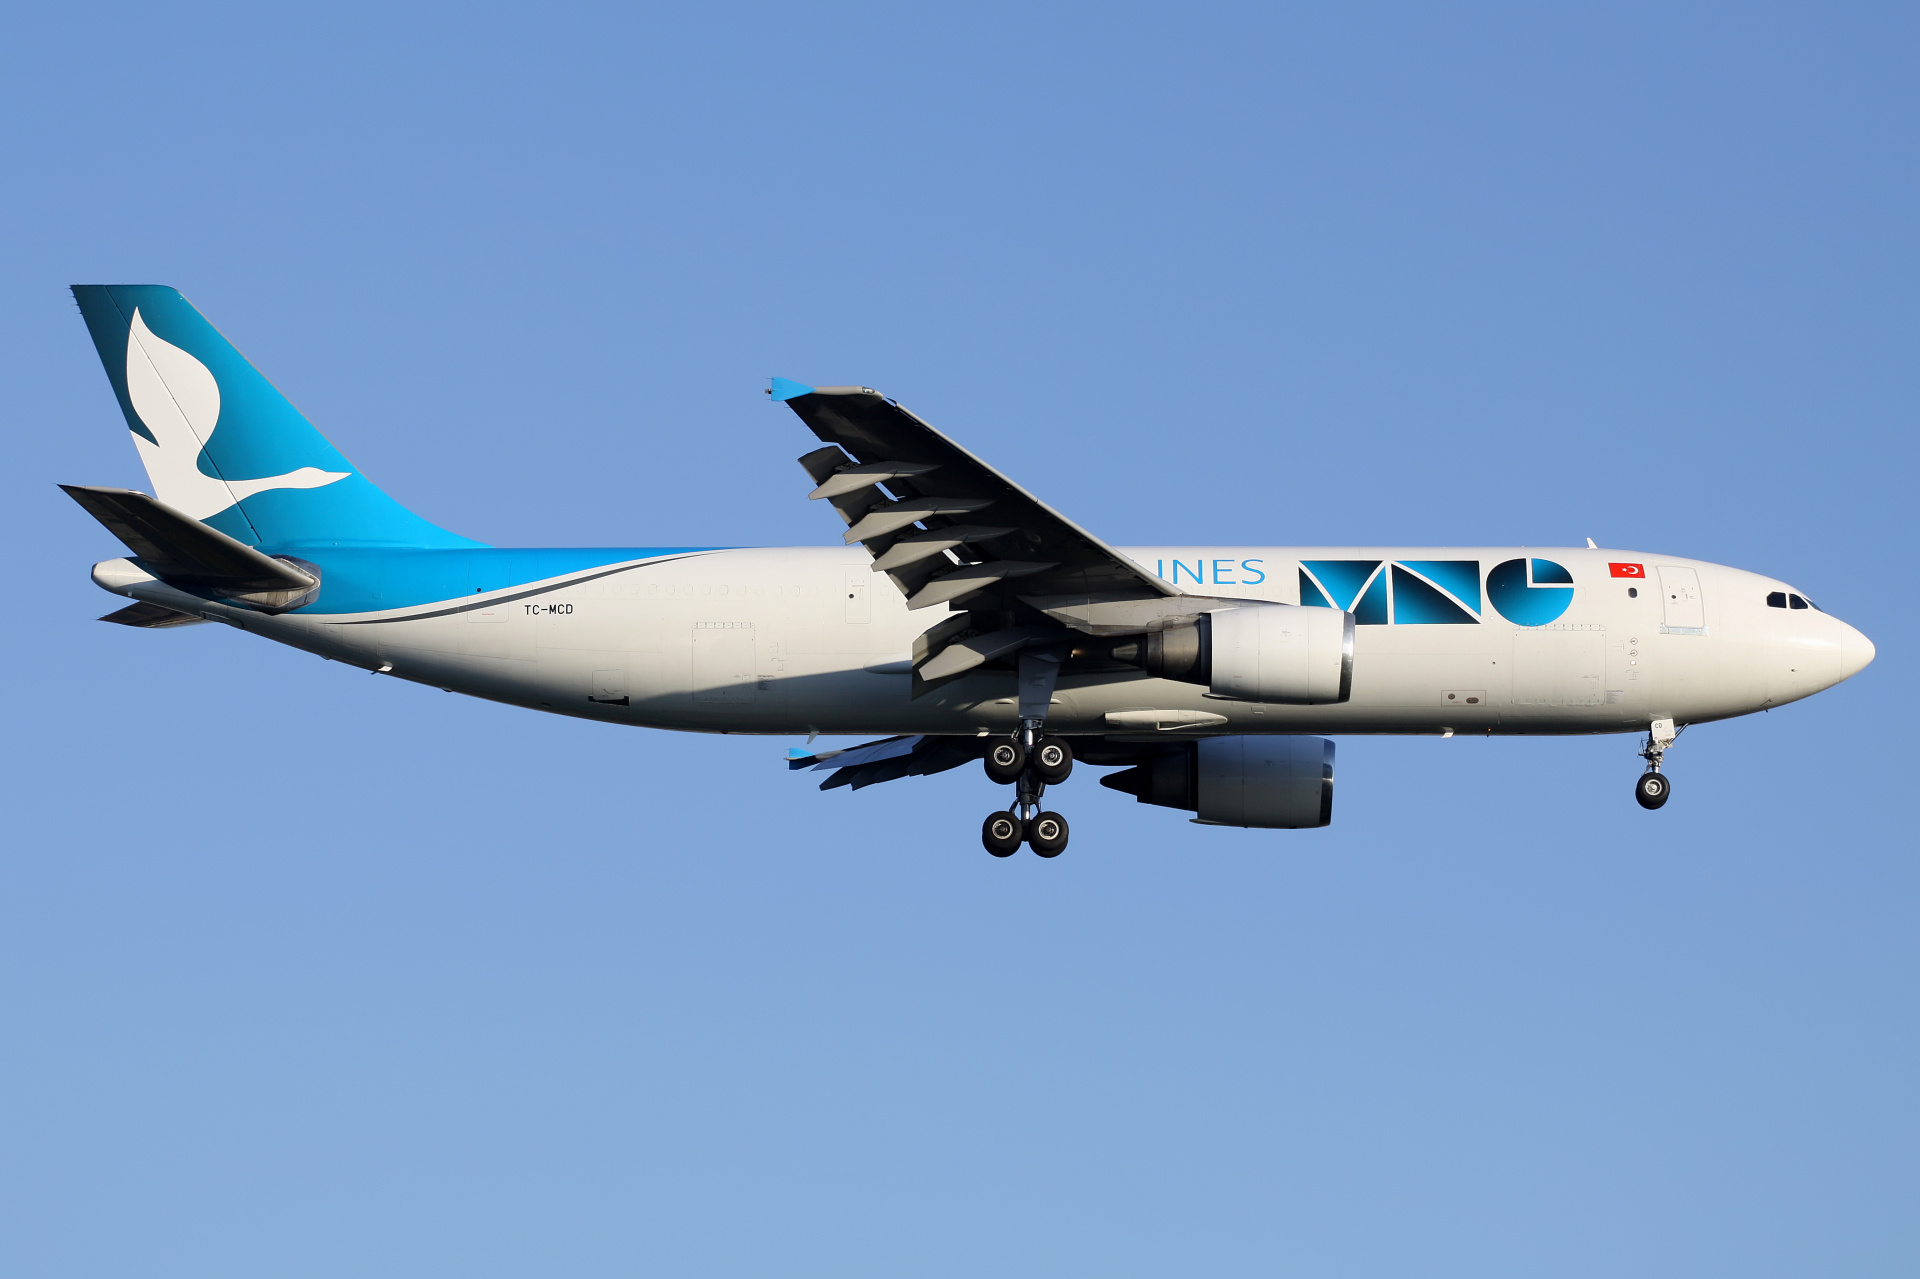 TC-MCD, MNG Airlines Cargo (Samoloty » Port Lotniczy im. Atatürka w Stambule » Airbus A300B4-600F)